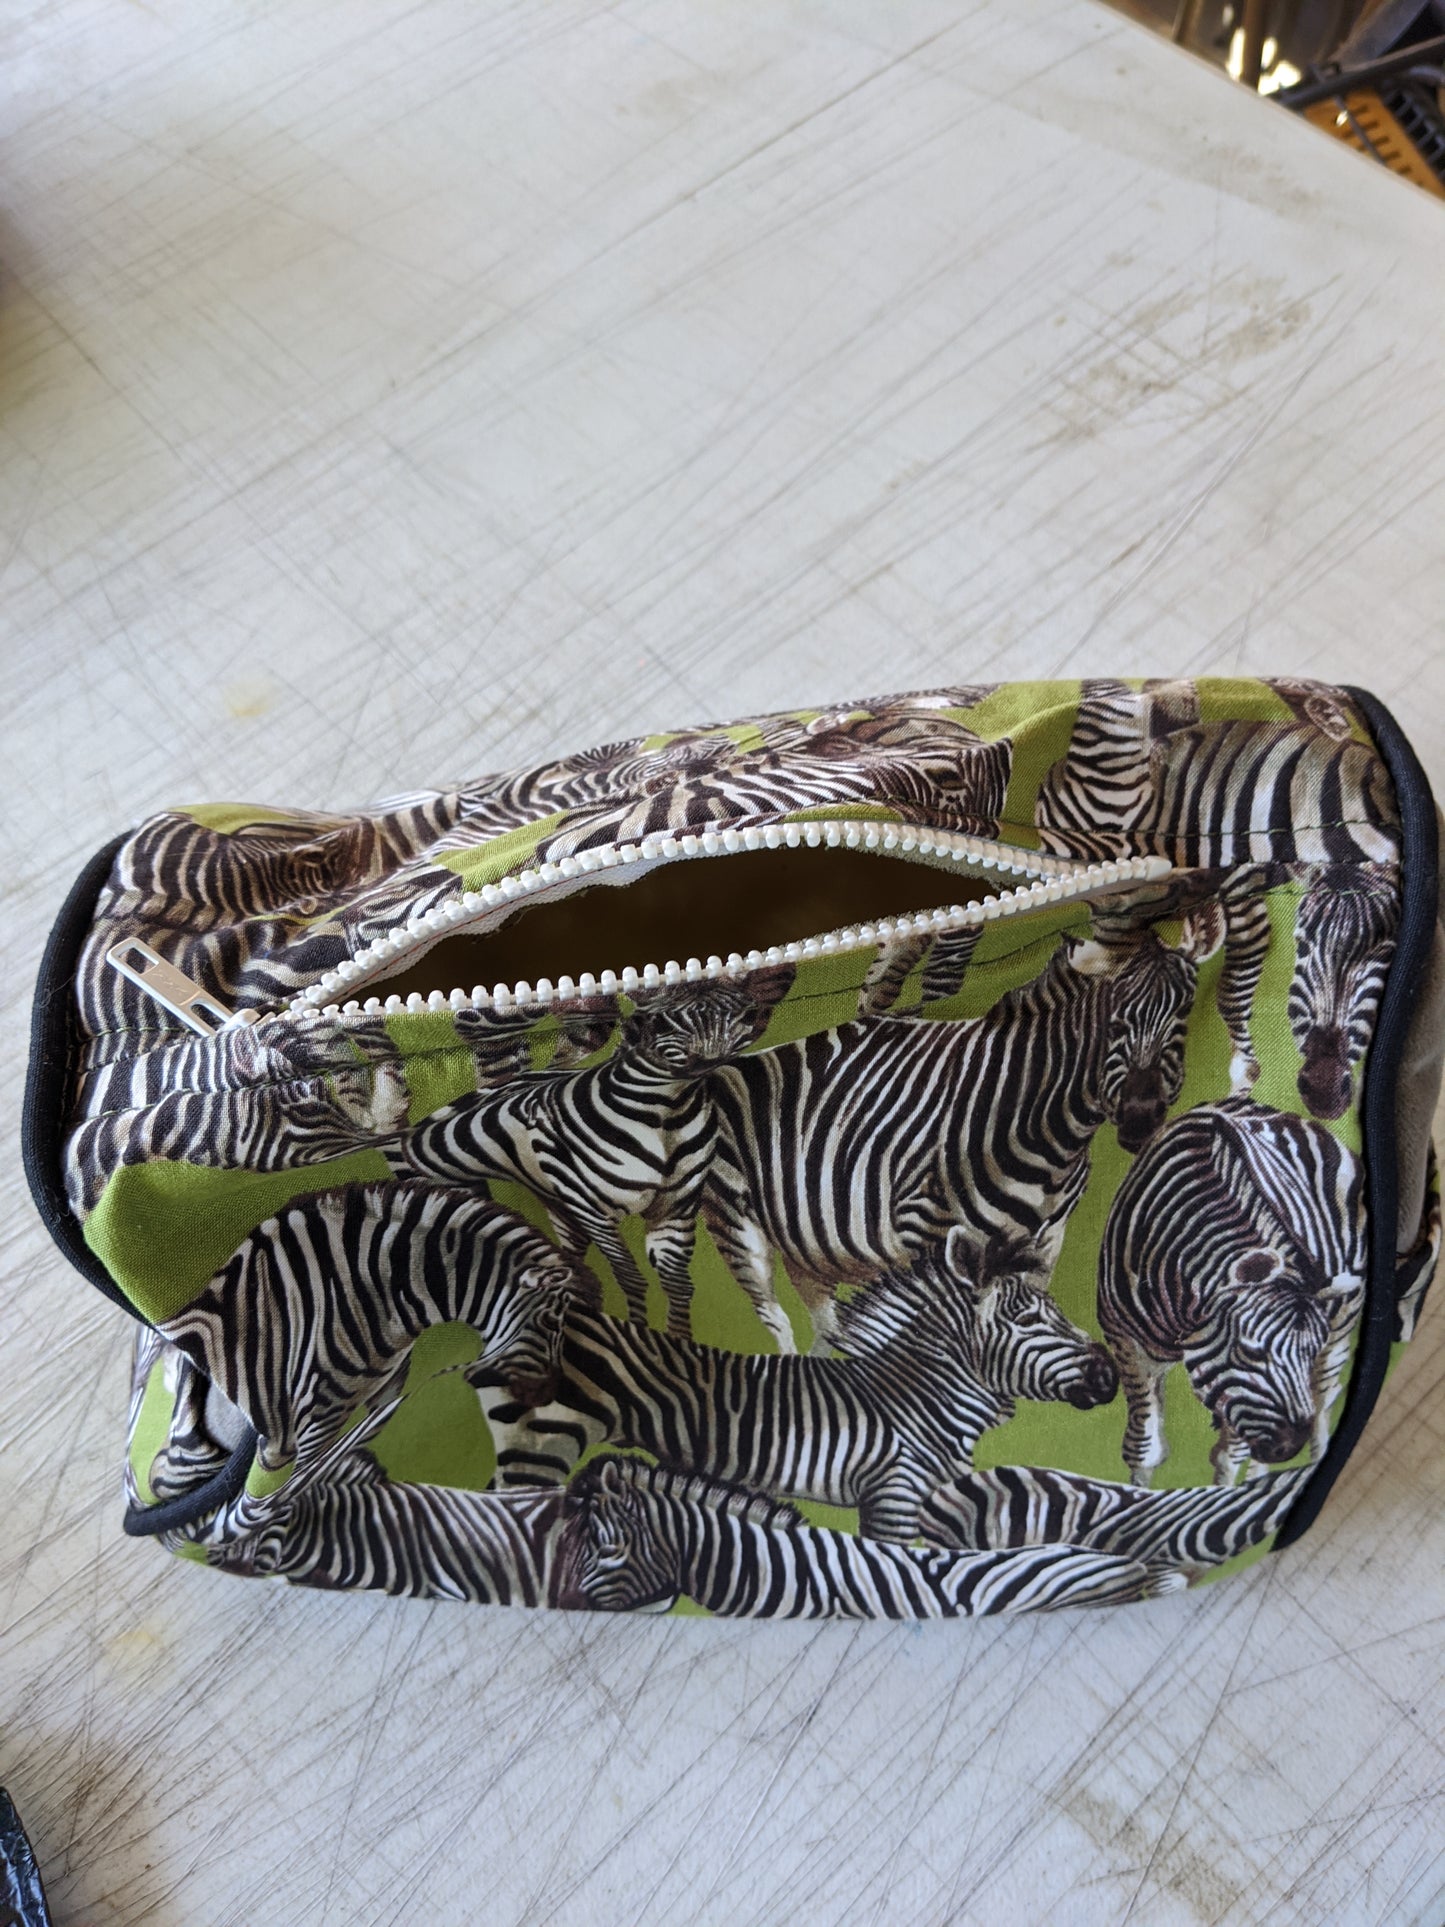 Zebra Small Duffel Bag